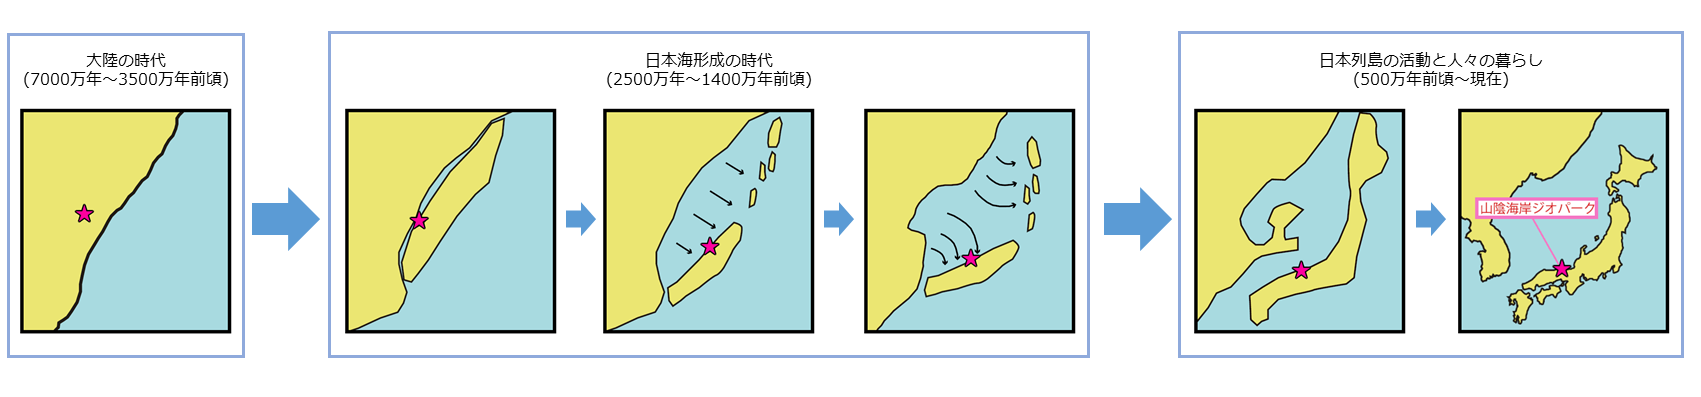 日本海形成の図